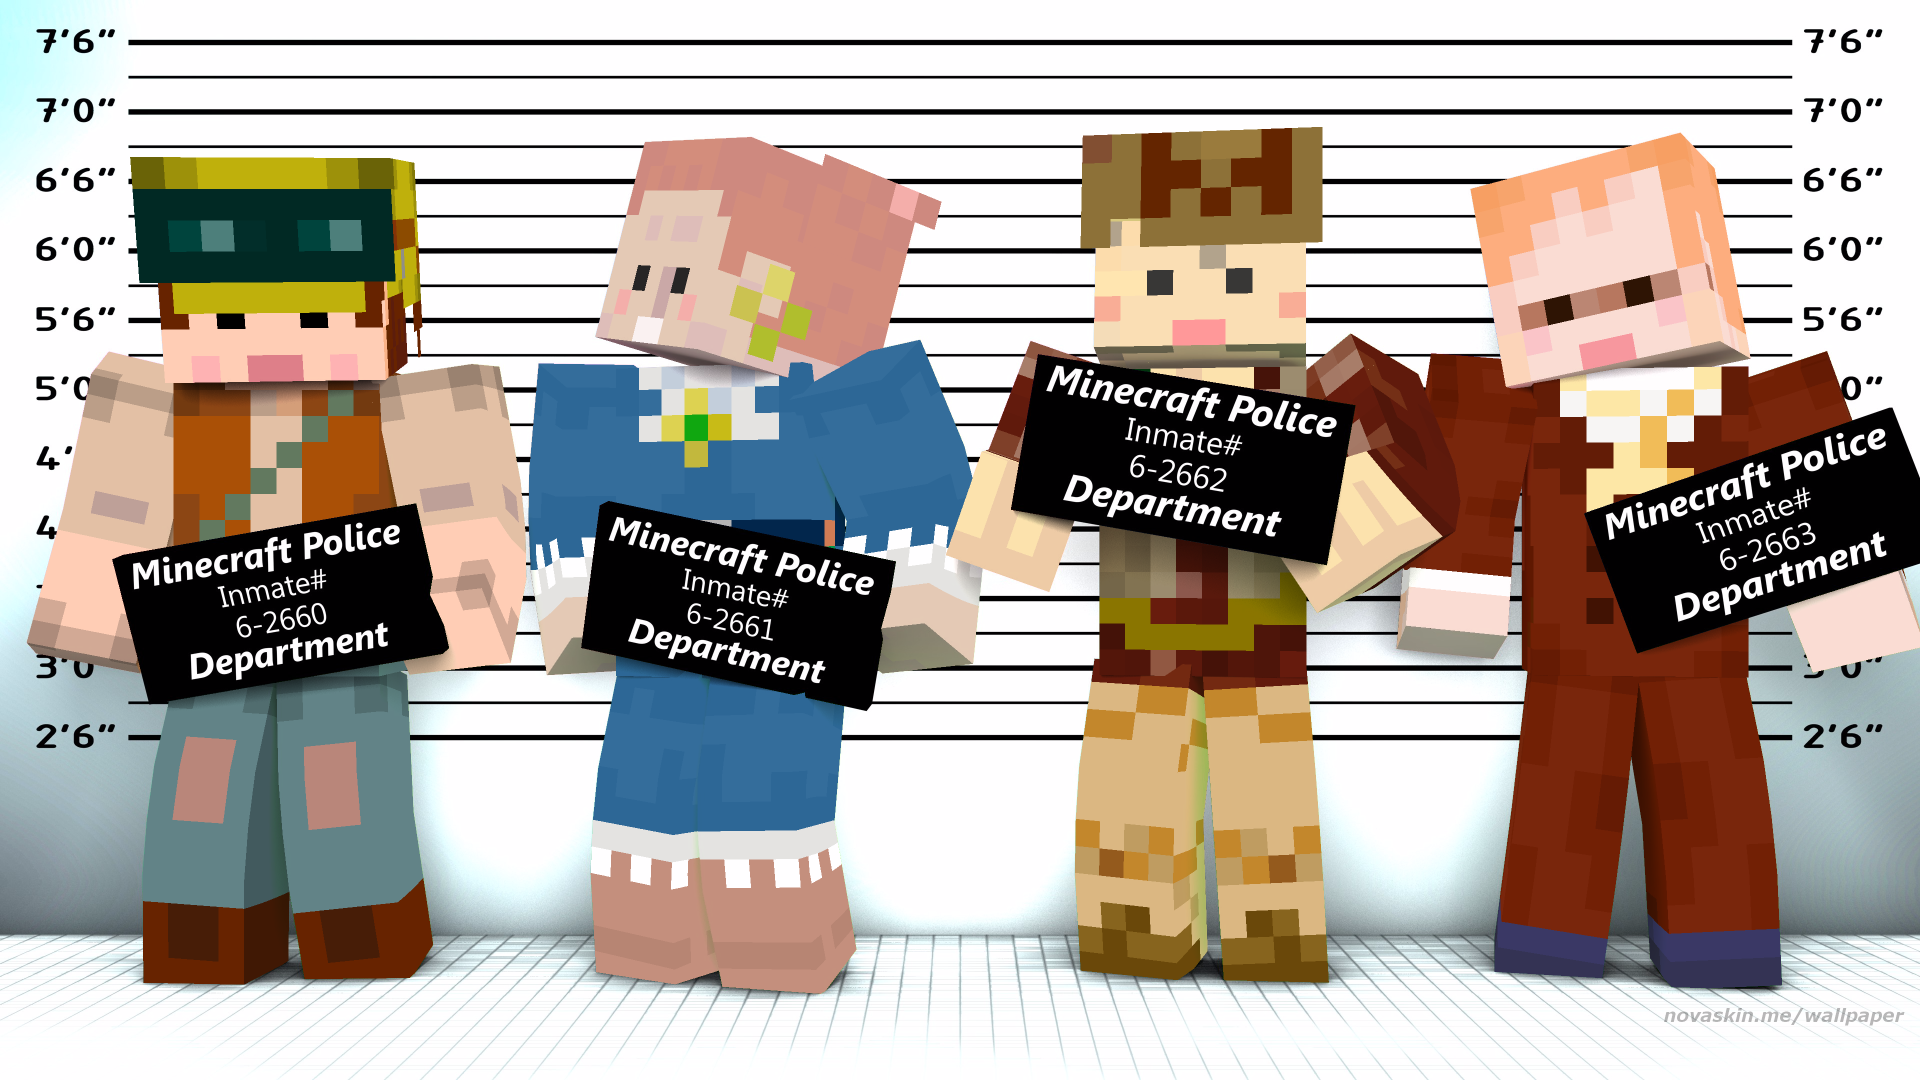 Novaskin Minecraft Wallpaper 1 はじクラ はじめてのマインクラフト